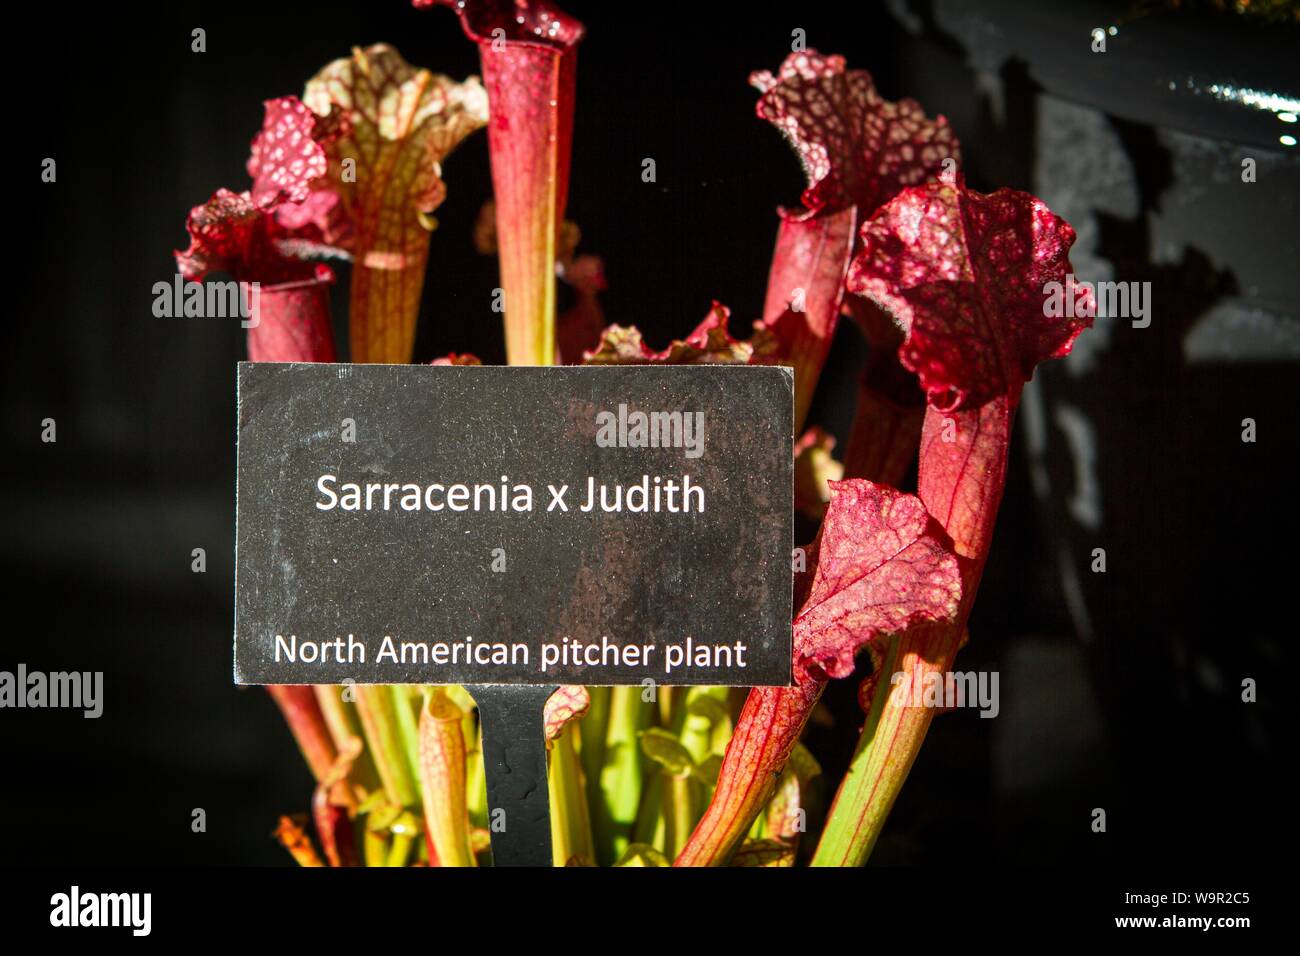 sarracenia x judith pitcher plant Stock Photo